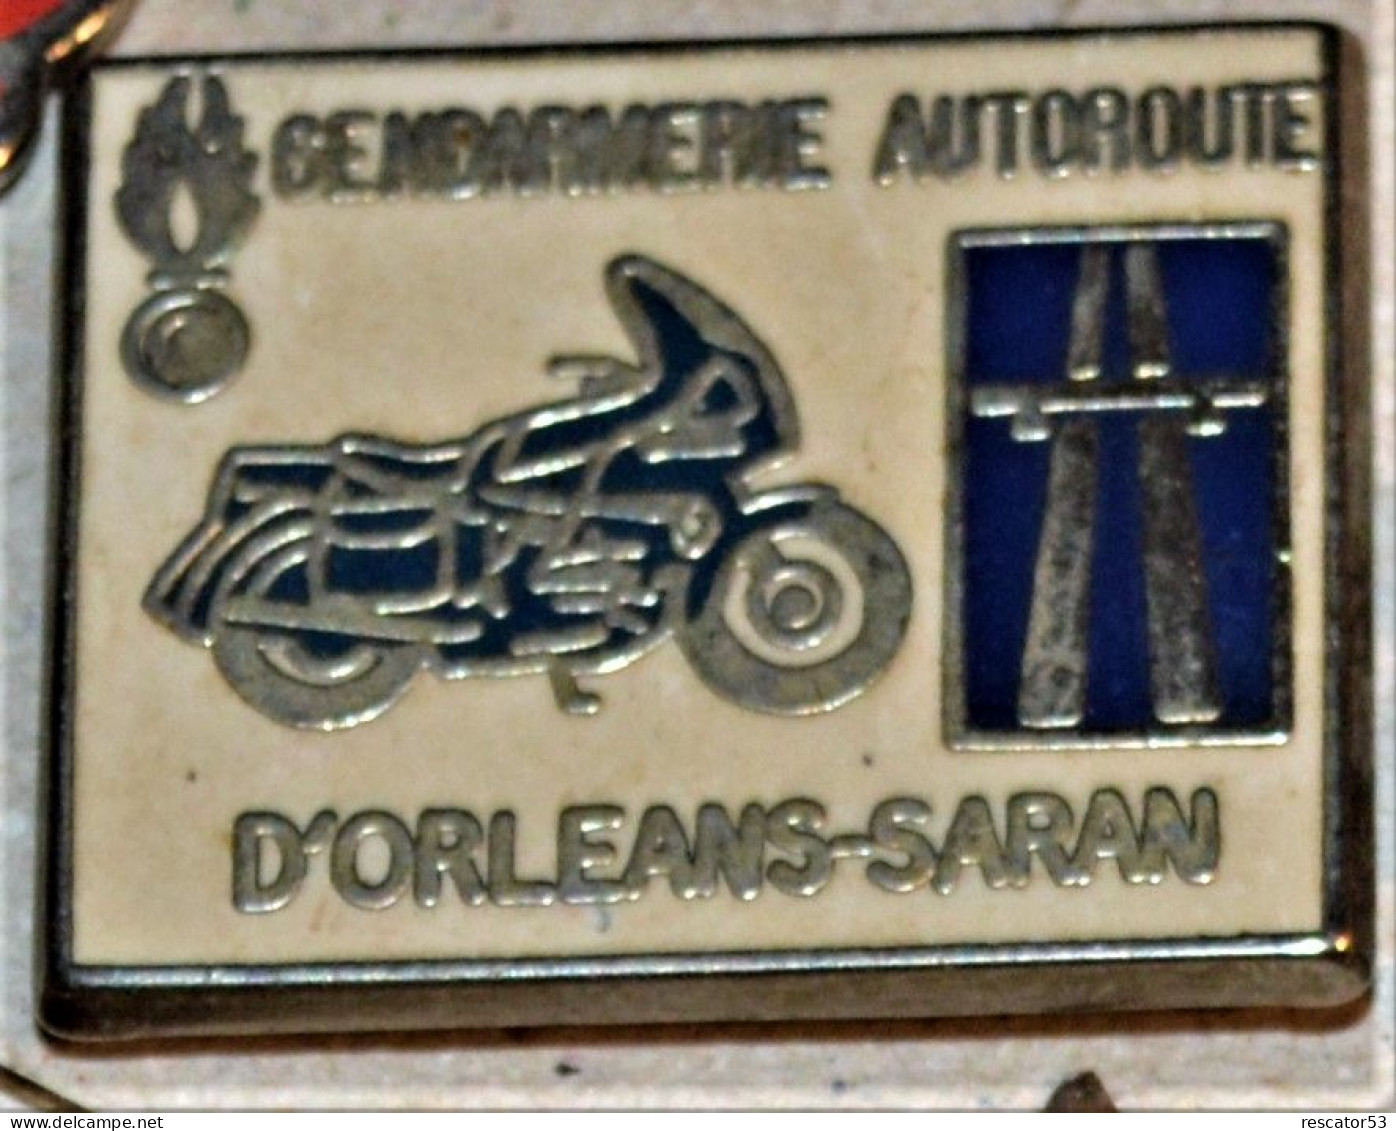 Pin's Gendarmerie Autoroute Orléans-Saran - Polizei